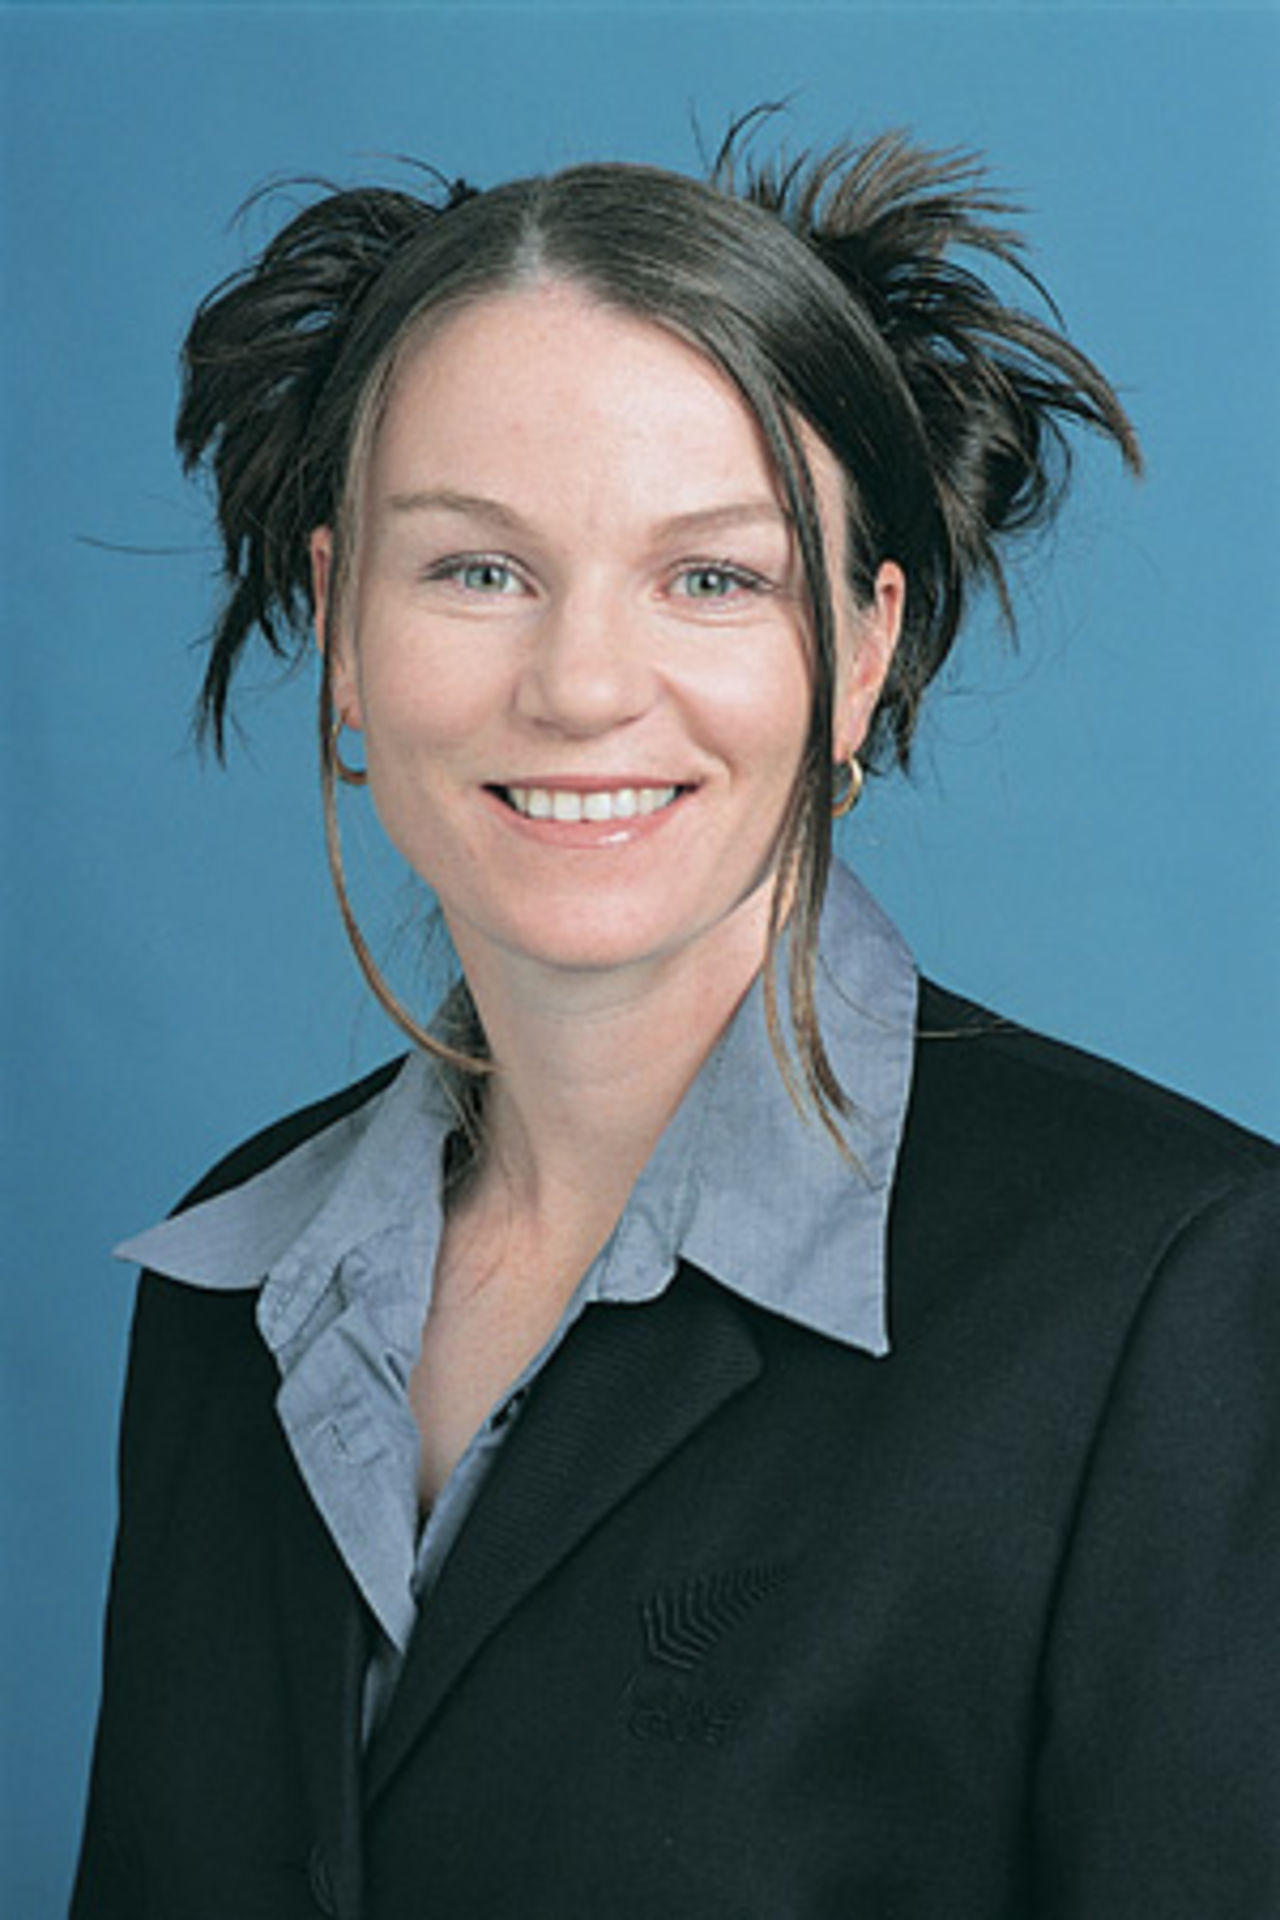 Portrait of Emily Drumm - New Zealand women's captain in the 2002 season.